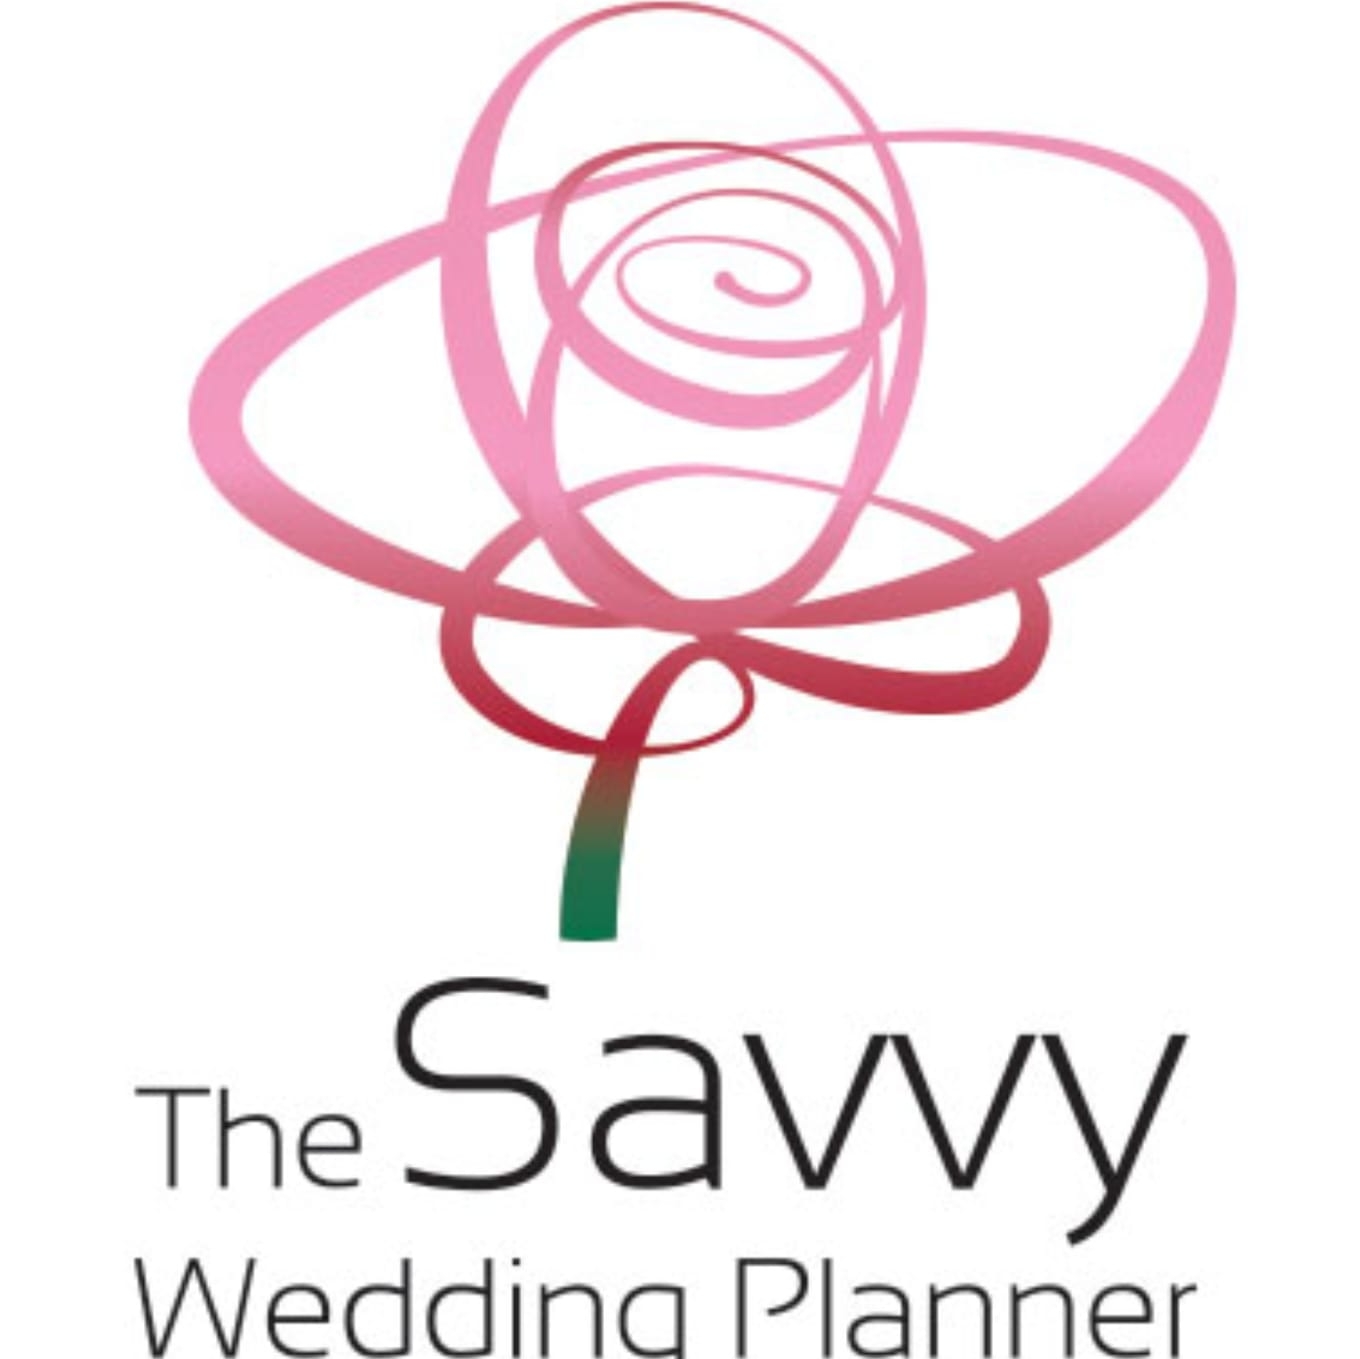 The Savvy Wedding Planner - Wedding Planner & Celebrancy Services